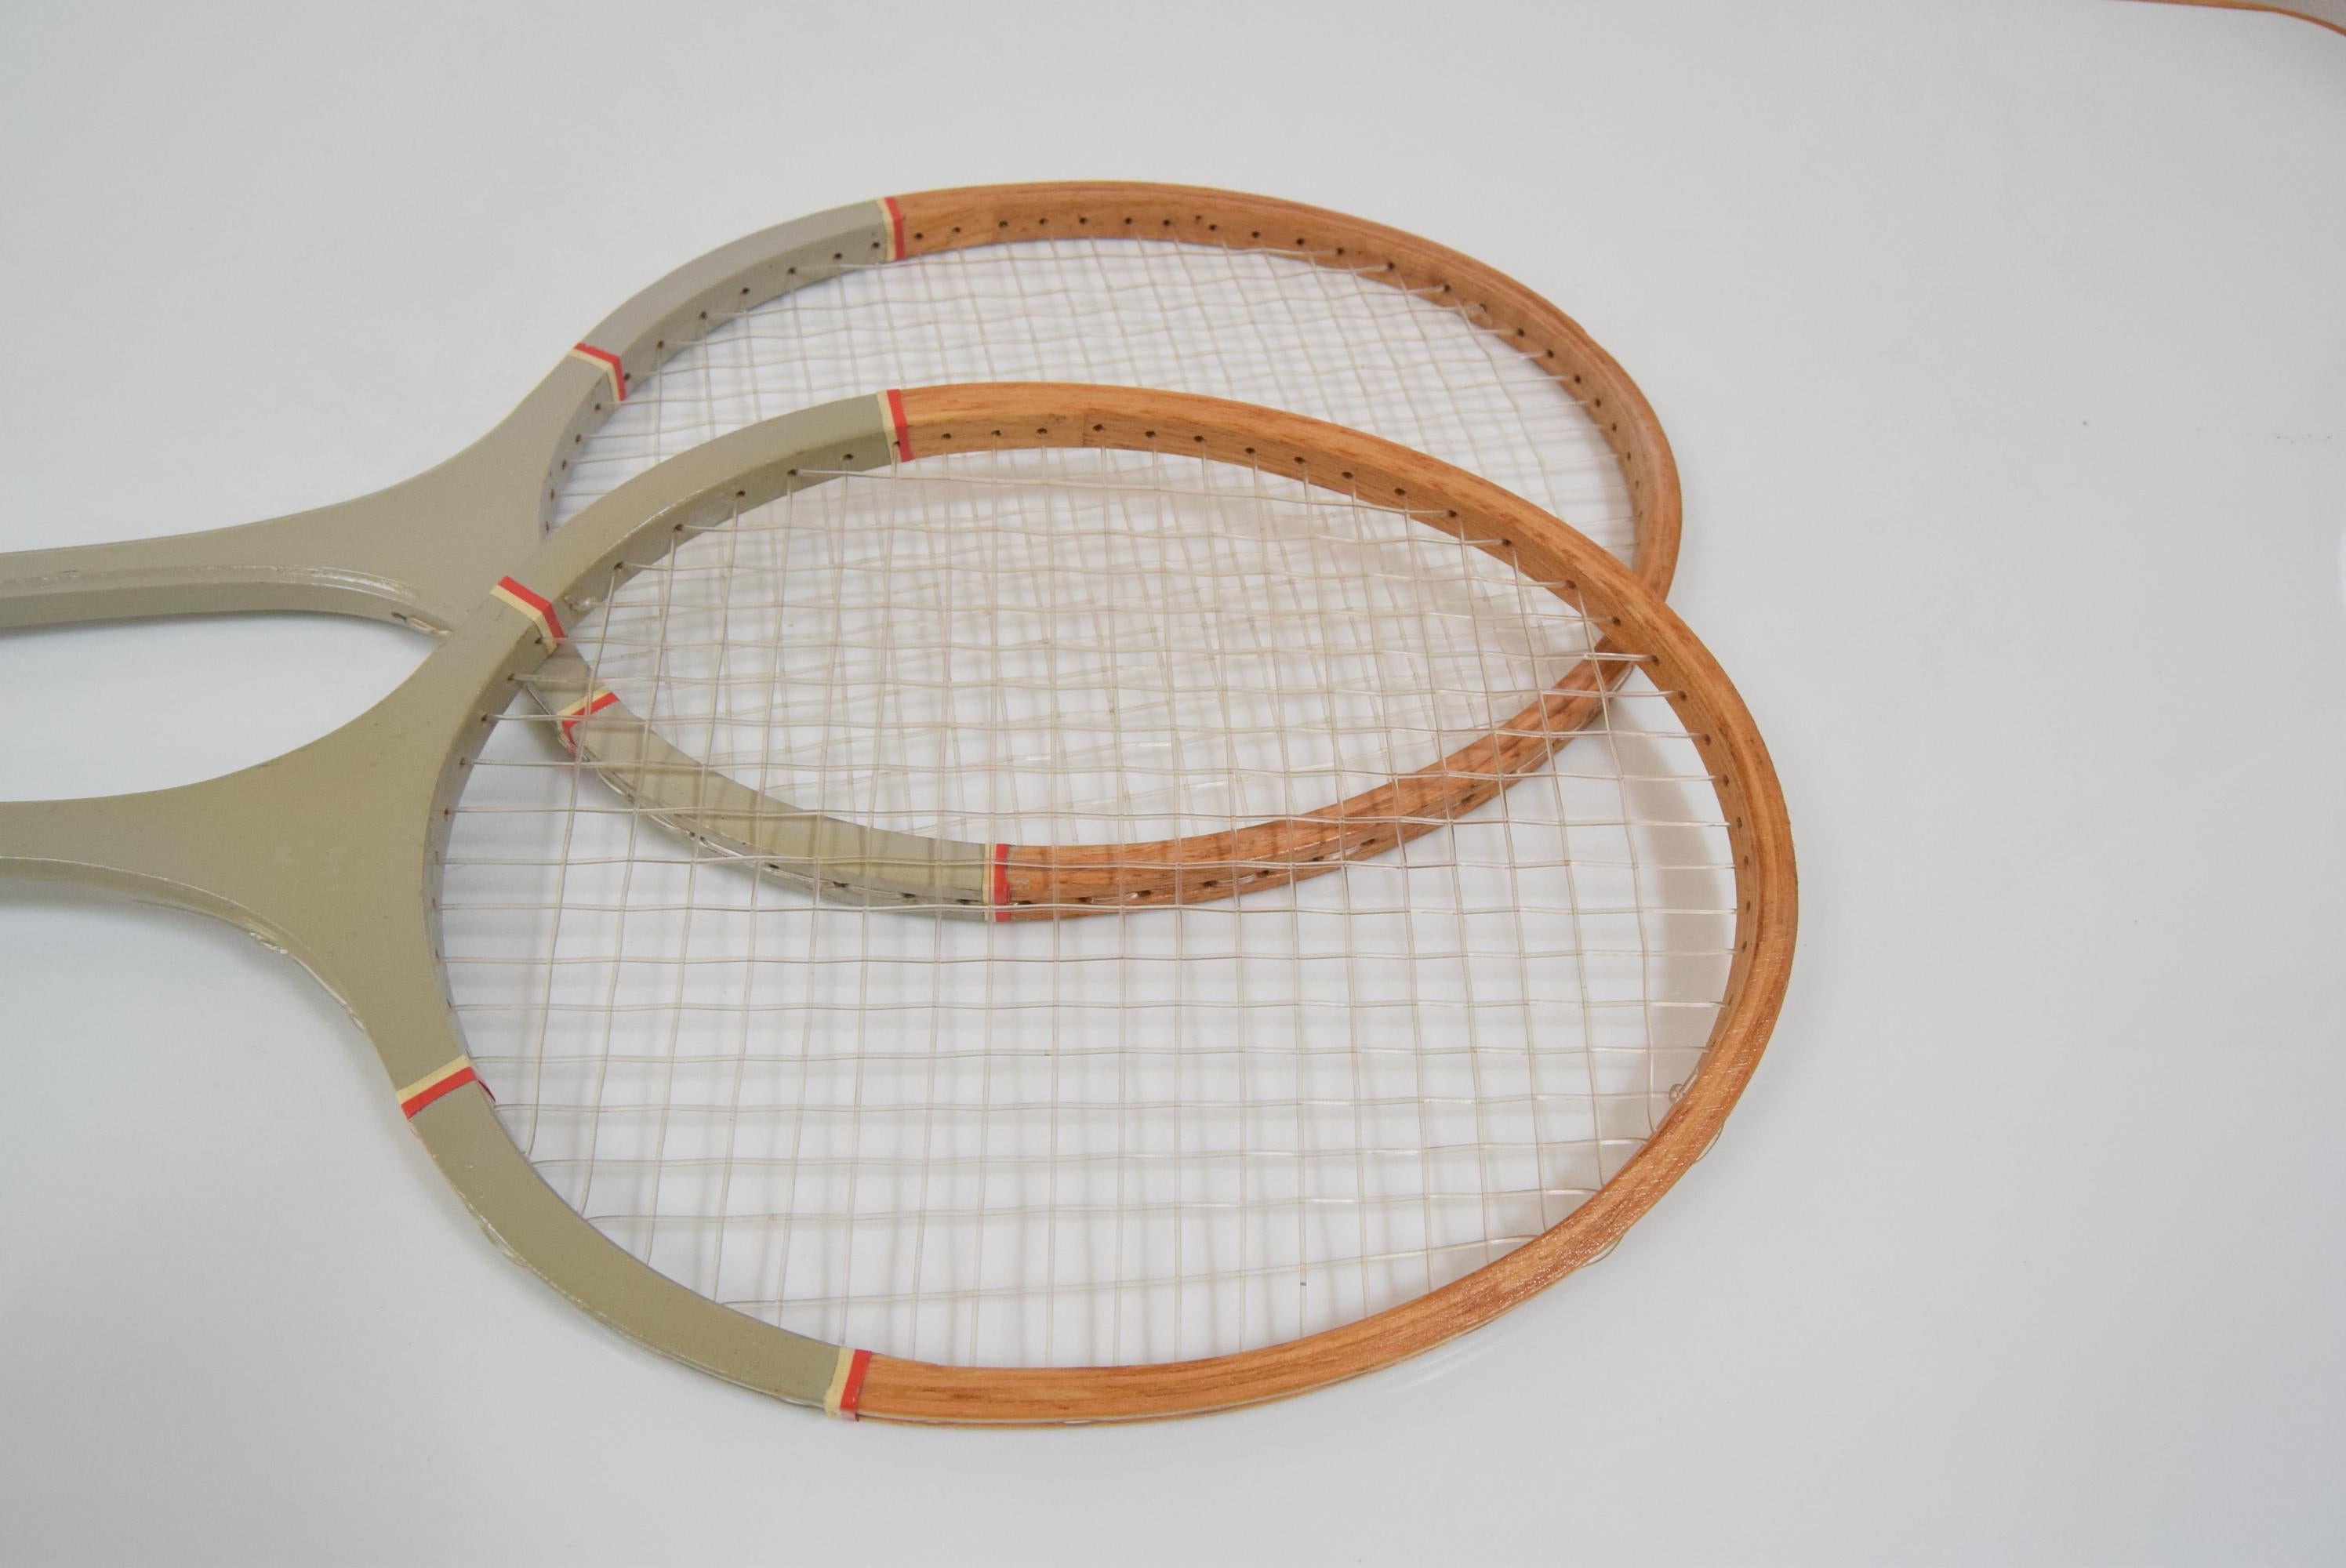 German Pair of Vintage Badminton Rackets, circa 1970's